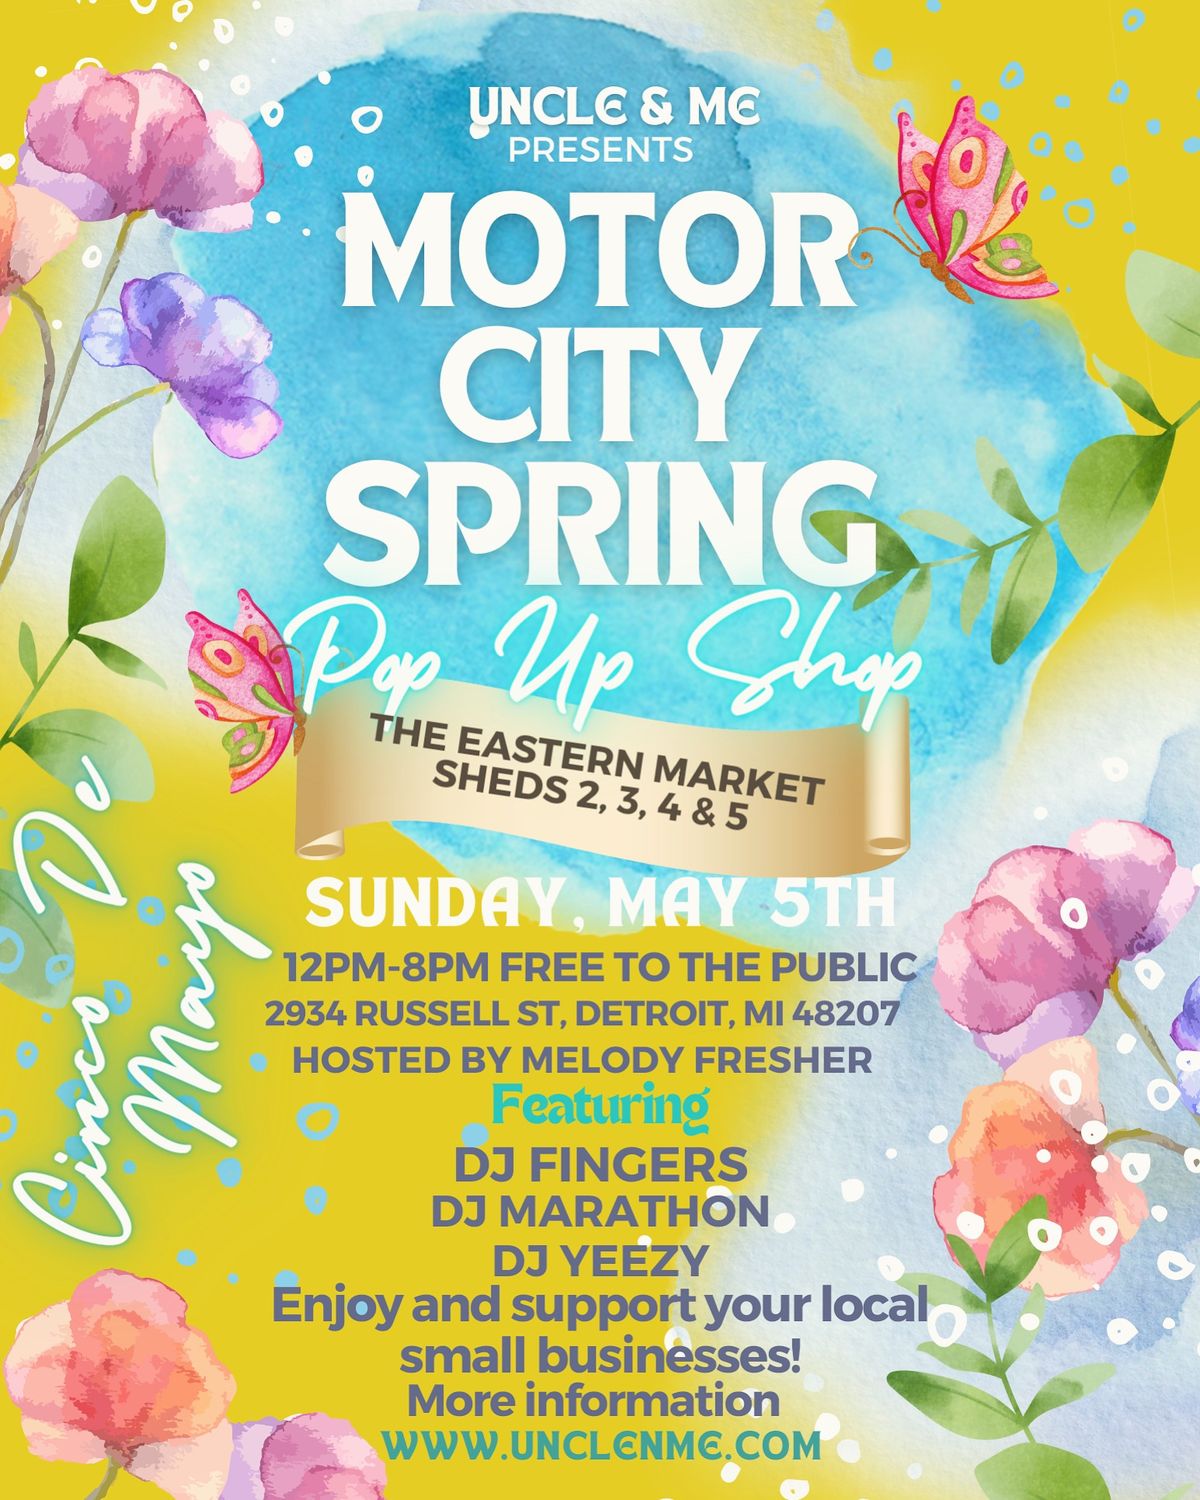 The Motor City Spring Pop Up Shop